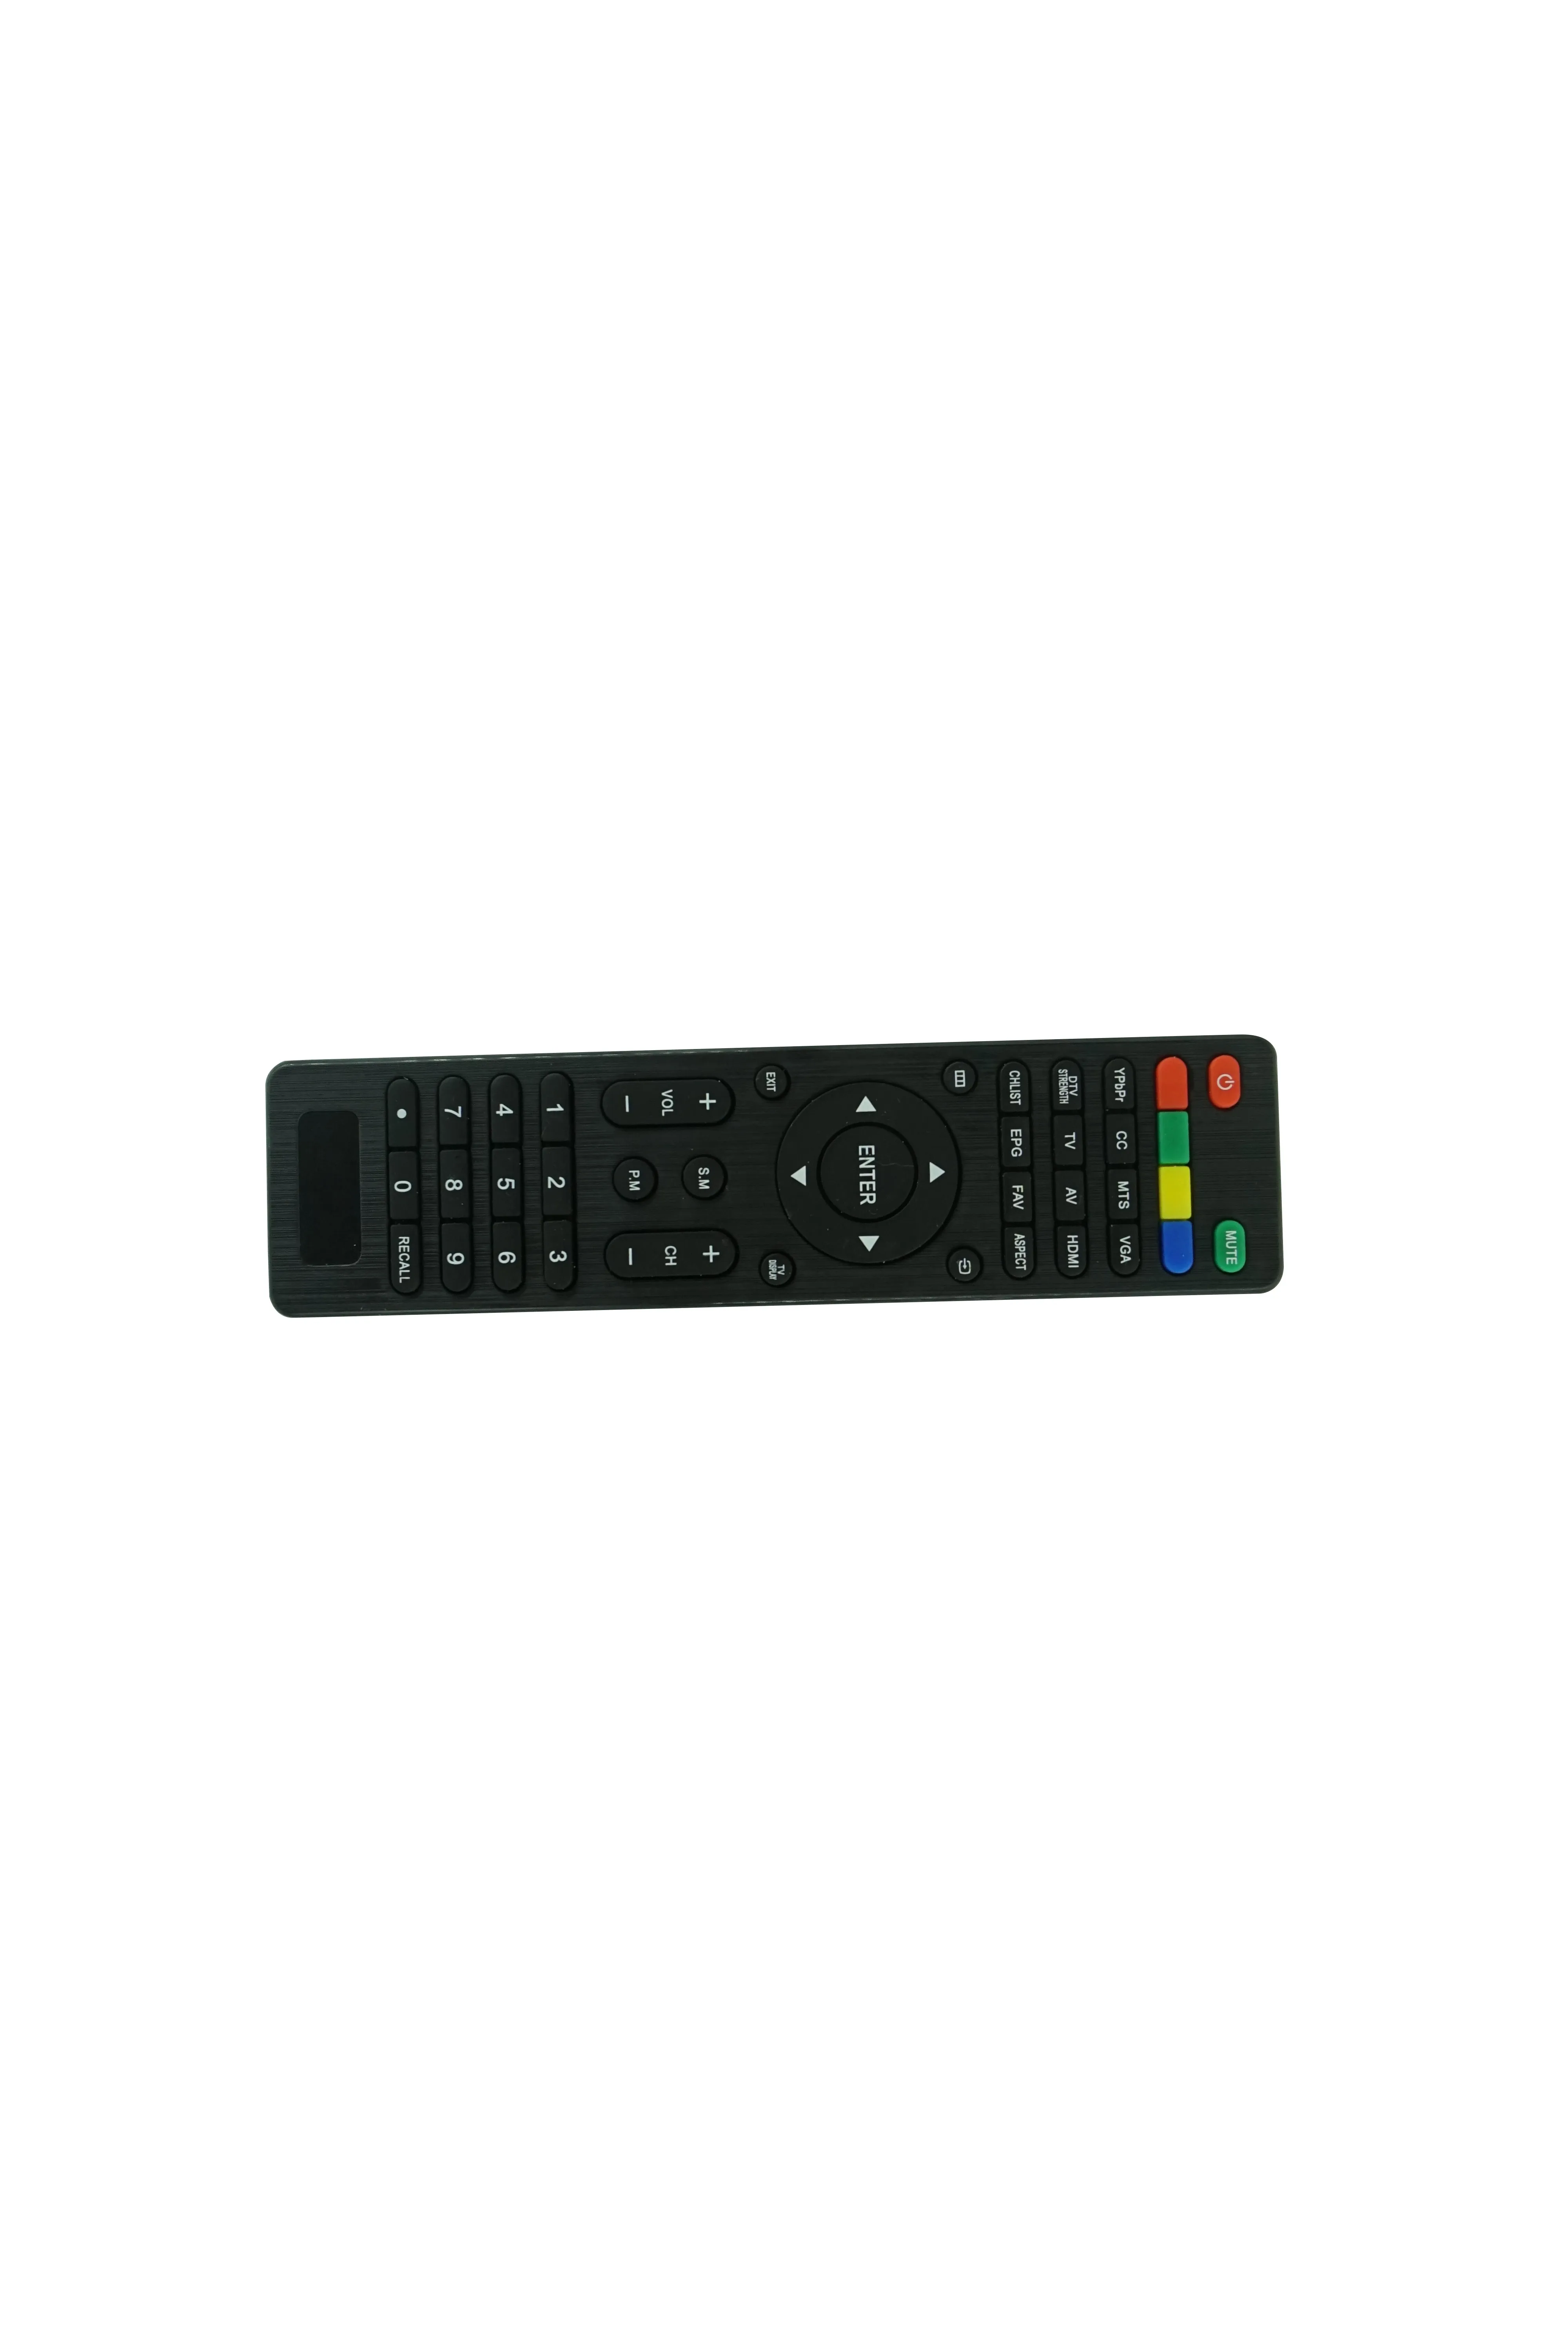 Remote Control For RCA RLEDV2680A RLEDV2445A RLDED5098-F-UHD RLED2446 RTU7074-B RT4038-F RLED2977A RLC2685A-B RLED2845A-B RTUE5870 Smart LCD LED HDTV TV